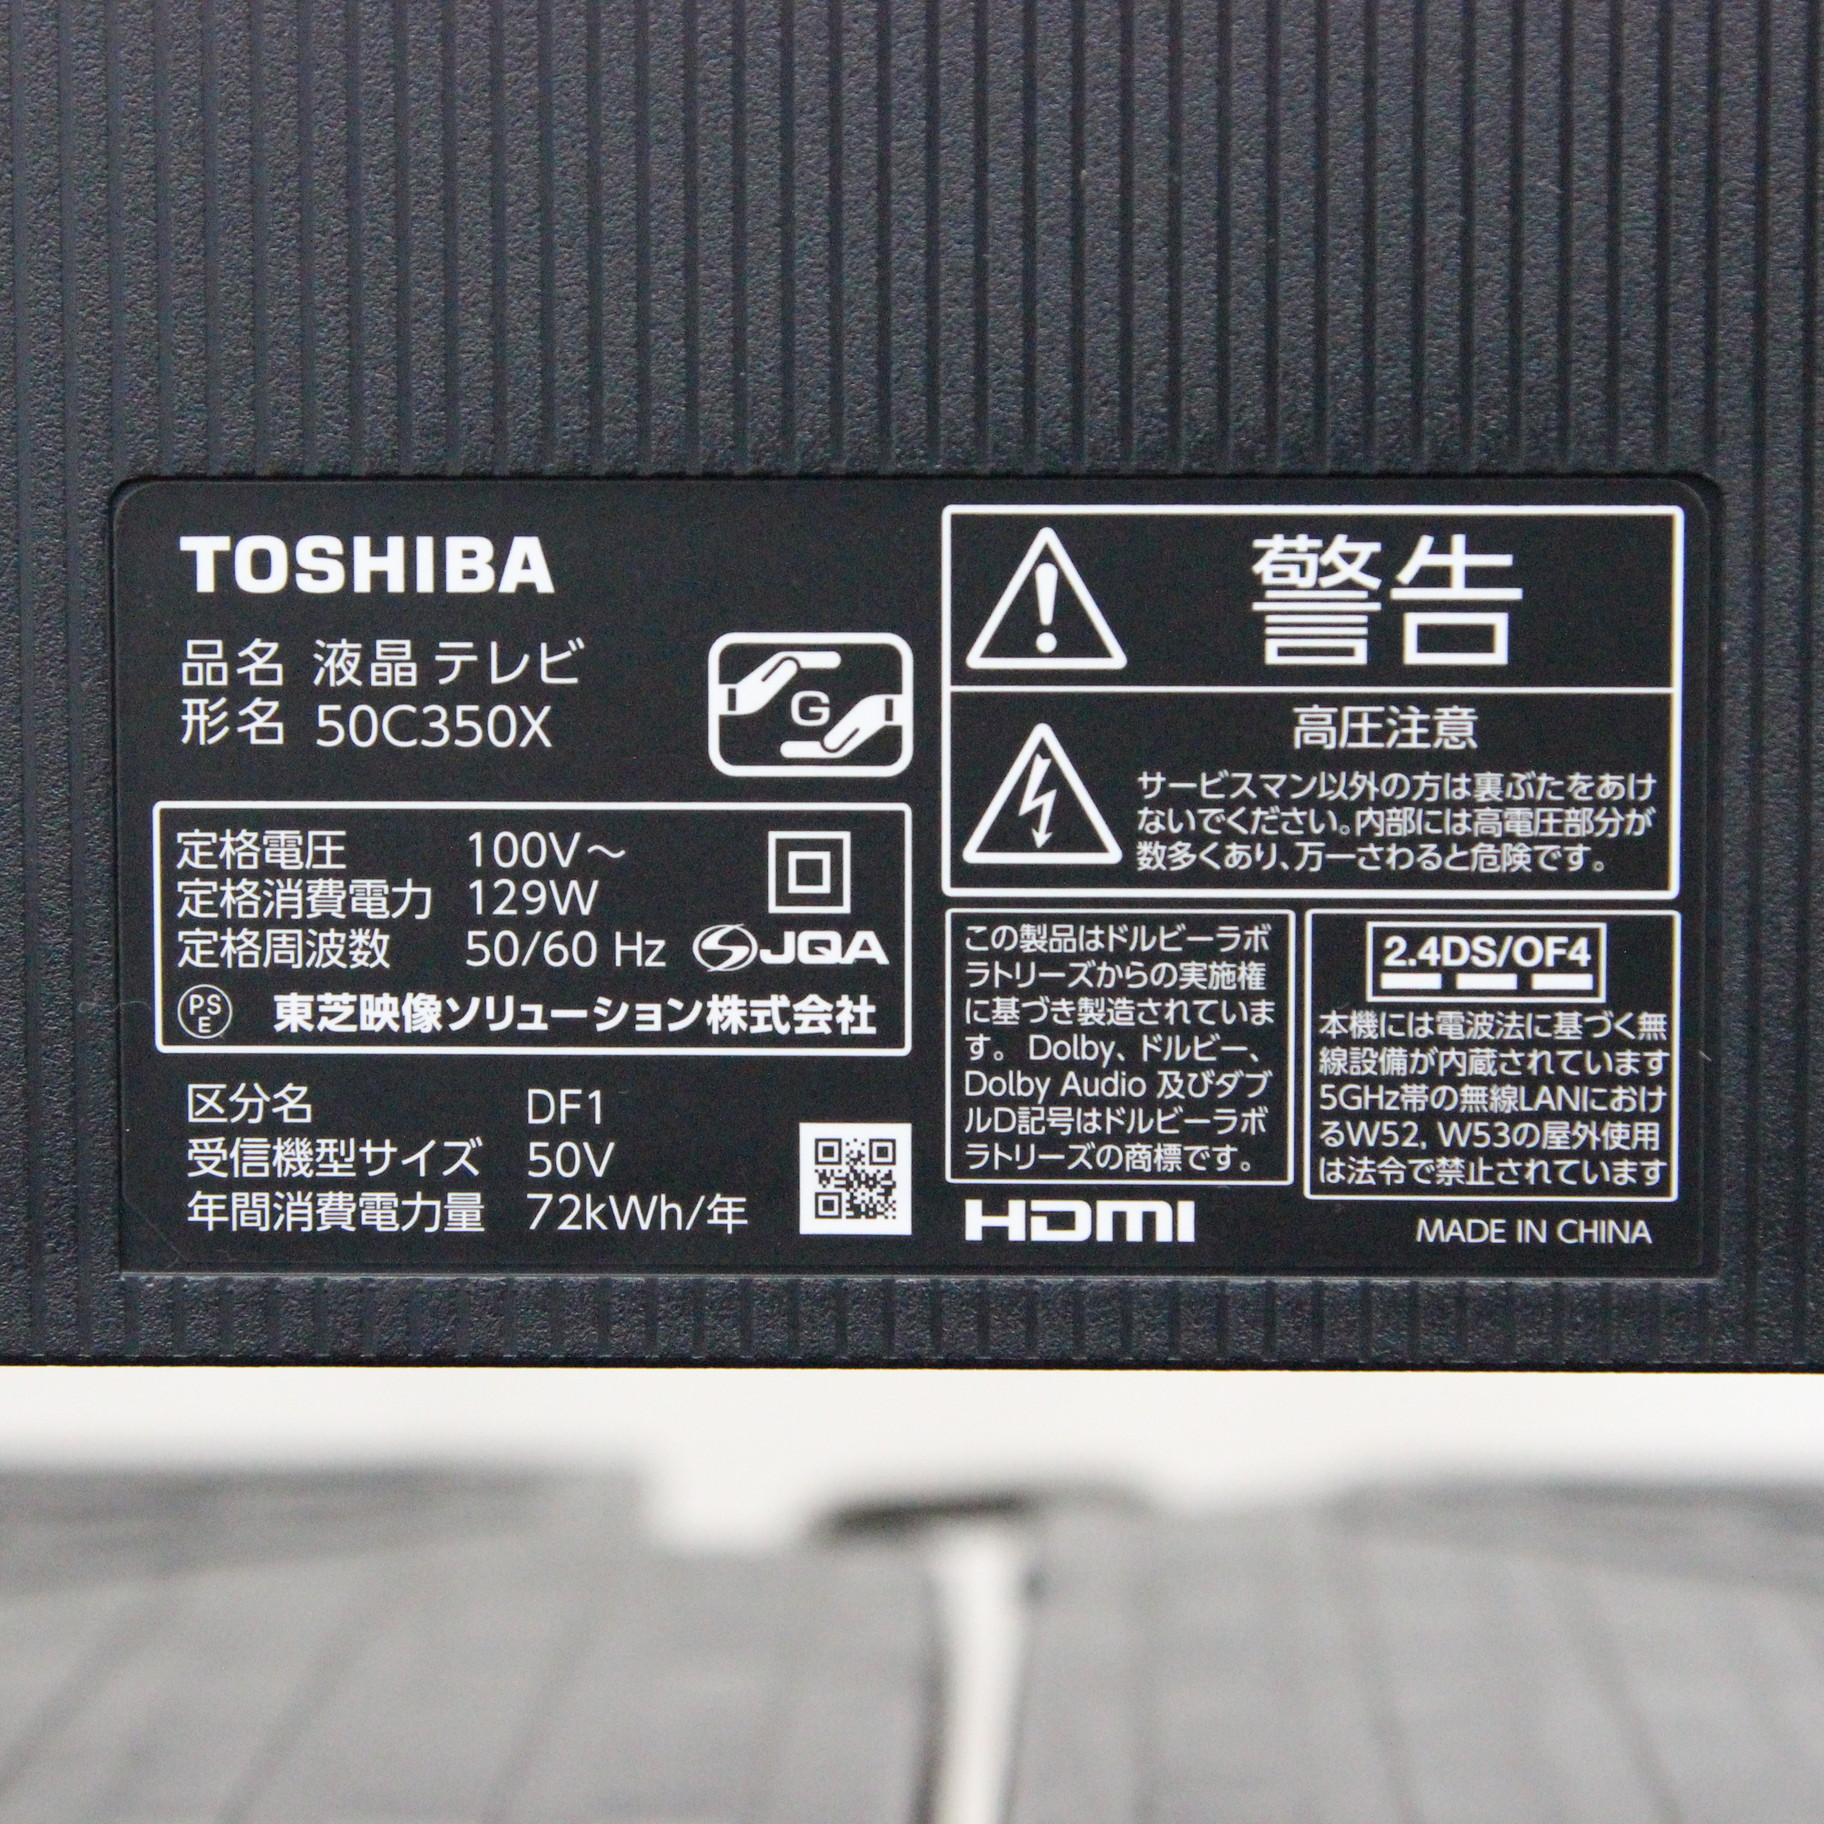 TOSHIBA 50C350X BLACK-